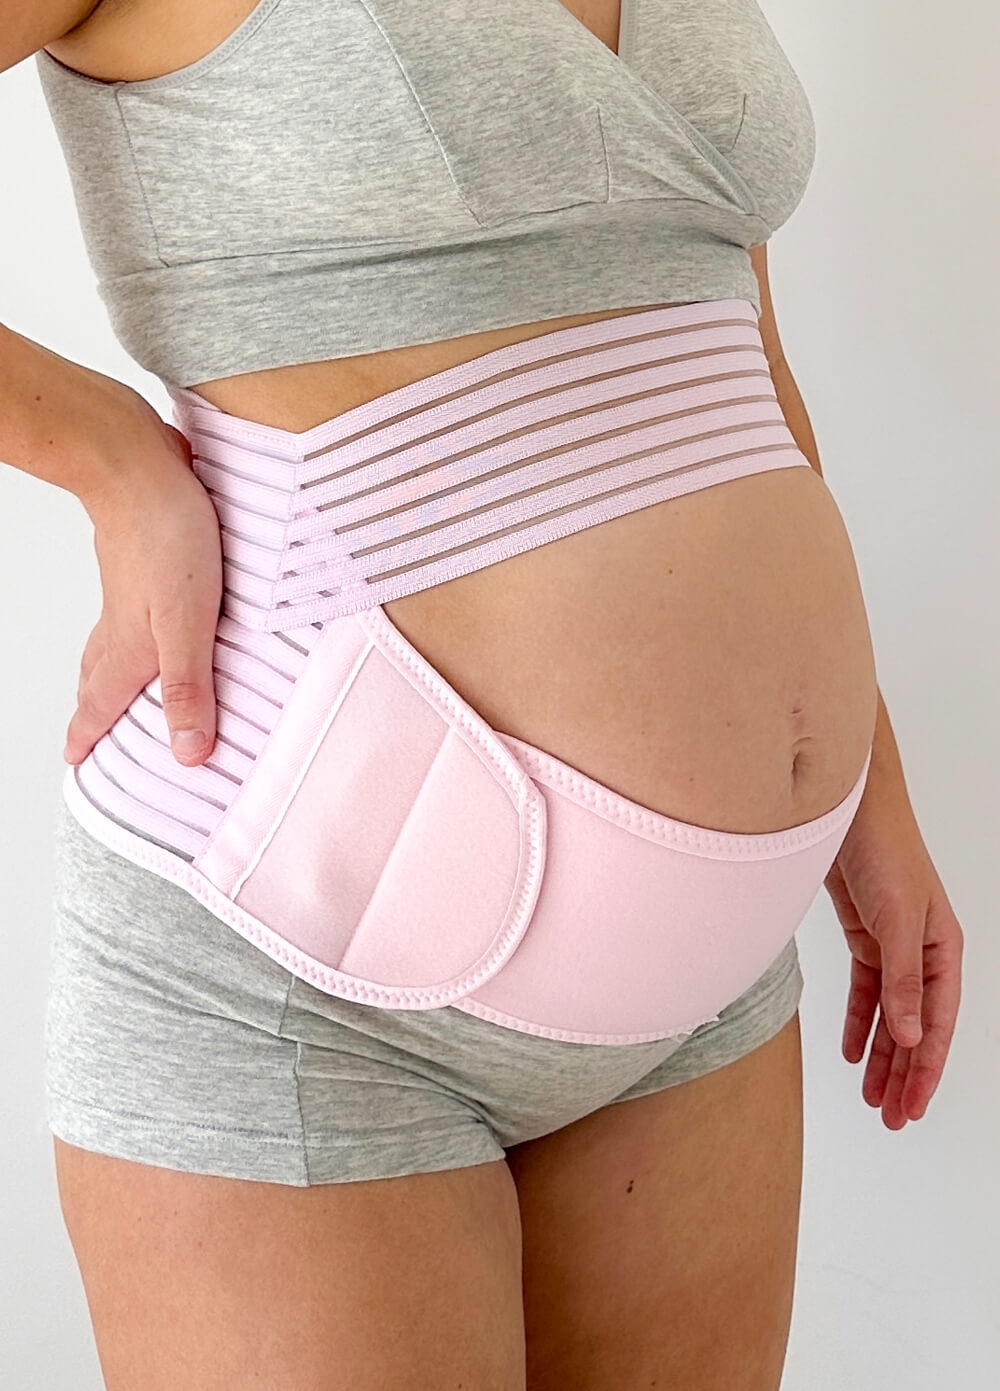 https://www.queenbee.com.au/database/images/queenbee-dutton-3pc-pregnancy-postnatal-belly-belt-in-pink-main-664743-9615.jpg